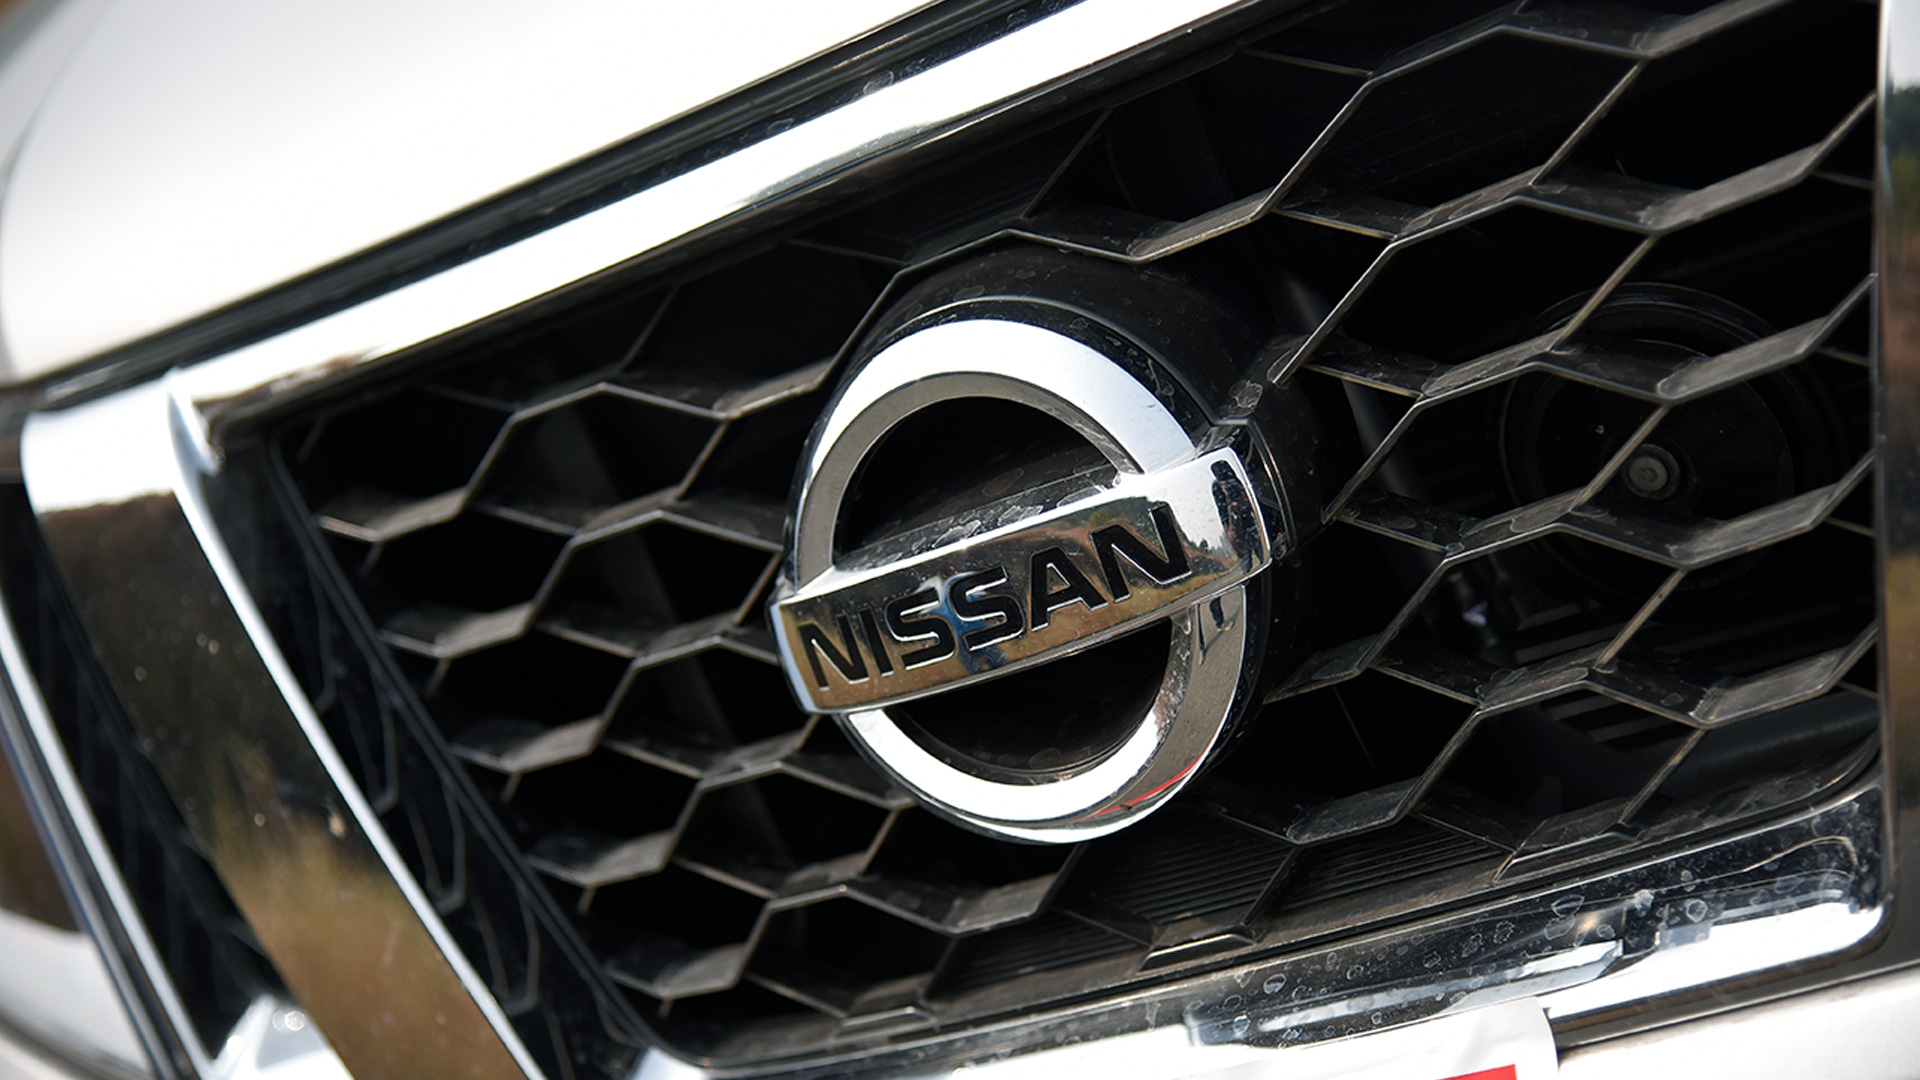 Nissan Terrano 2017 XV Premium AT dCi 110ps Exterior